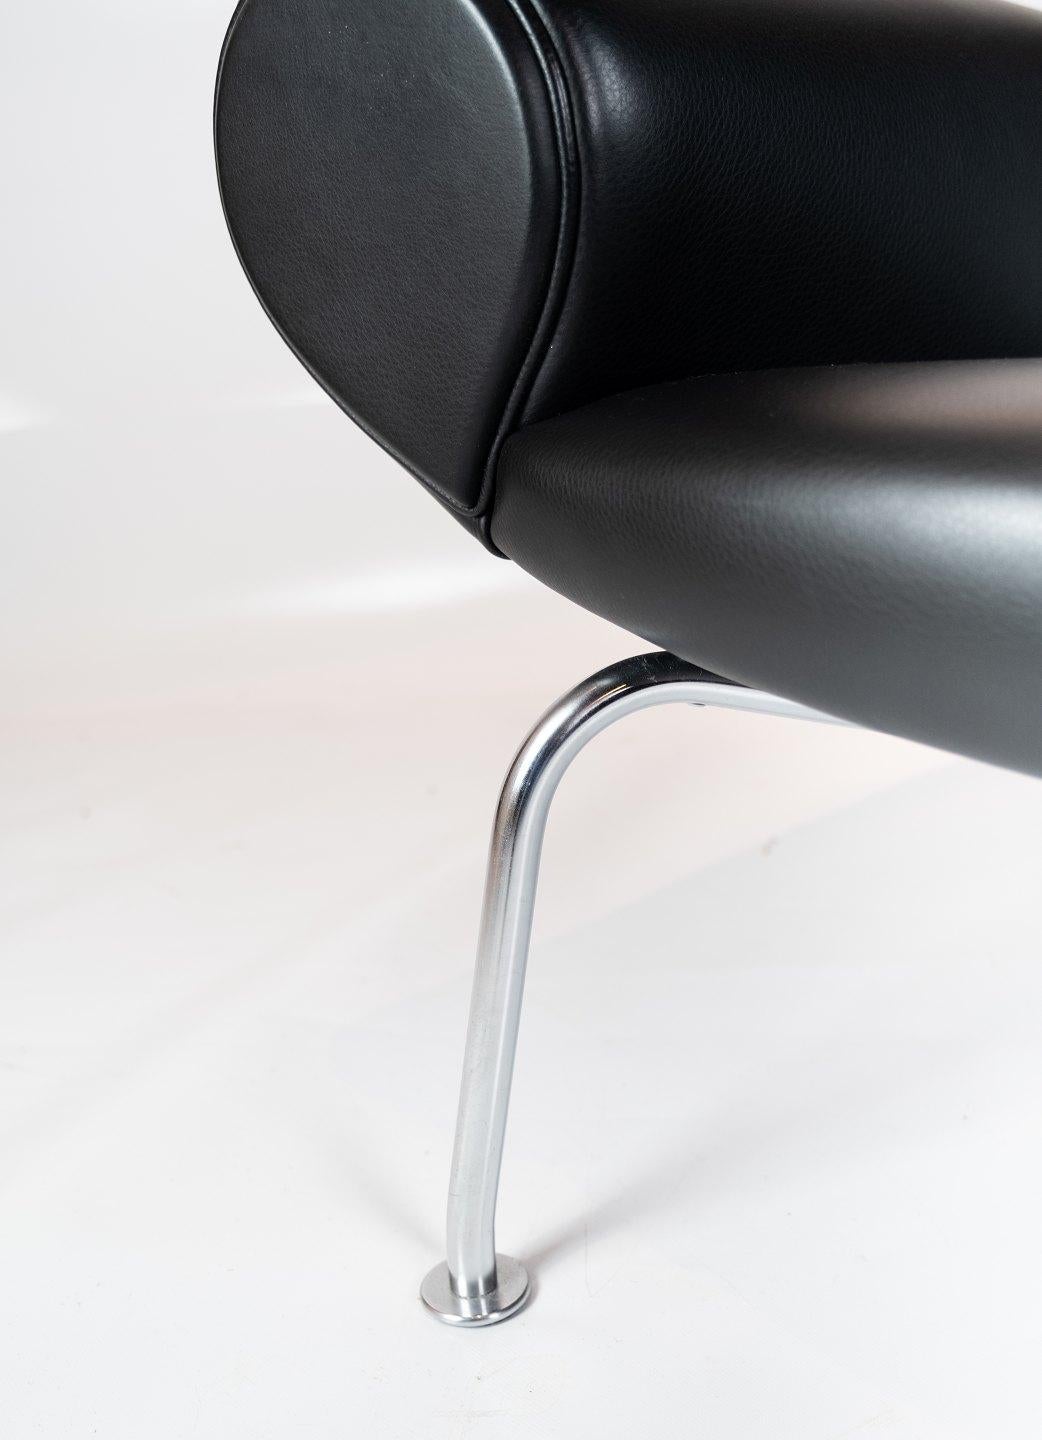 Danish Queen Chair, Model EJ 101, Designed by Hans J. Wegner